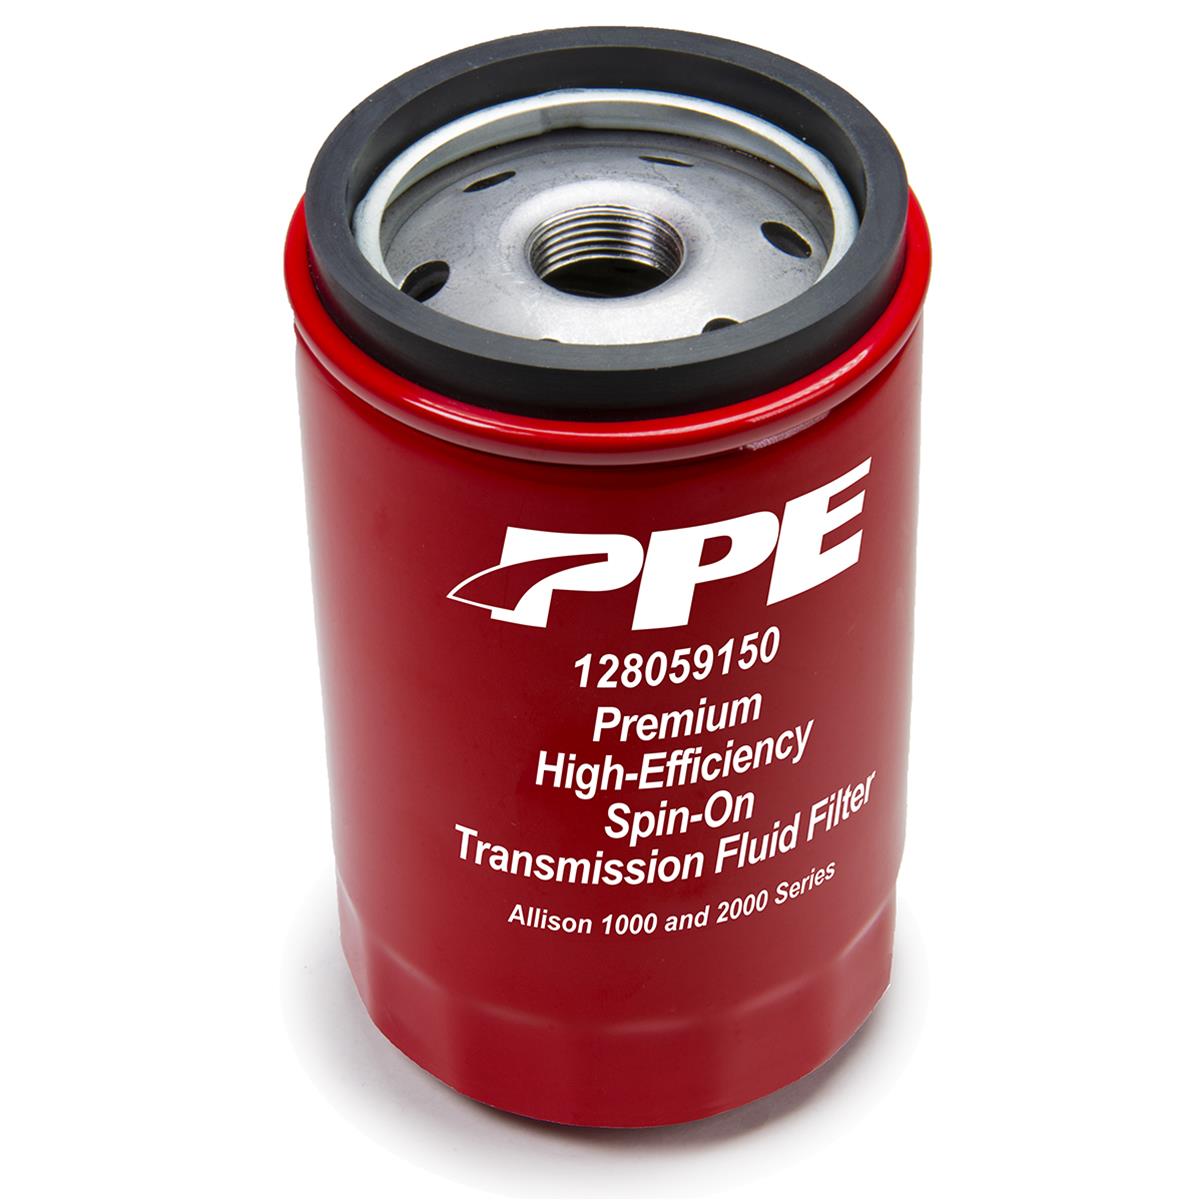 PPE 128059150 Pacific Performance Engineering Premium HighEfficiency